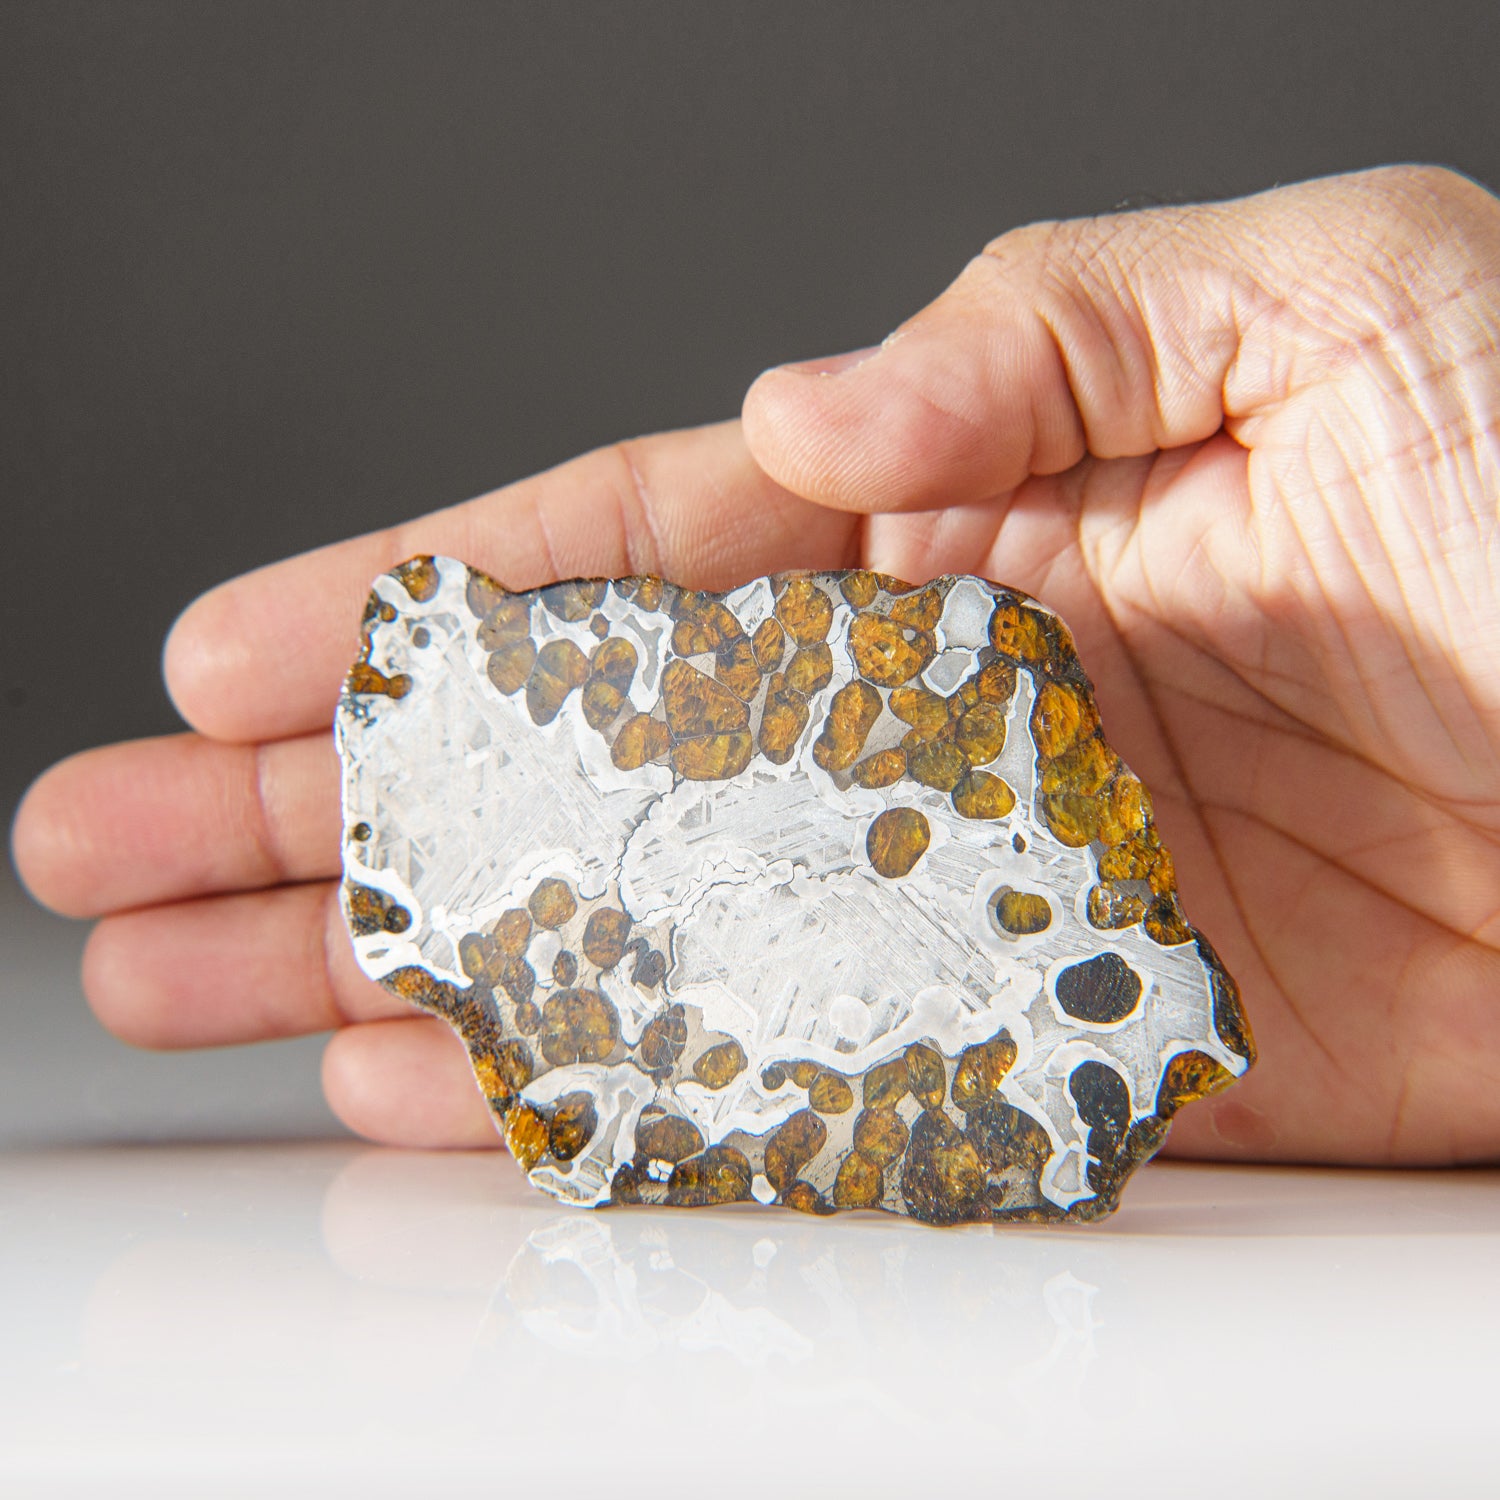 Genuine Brenhama Pallasite Meteorite Slice (90 grams)